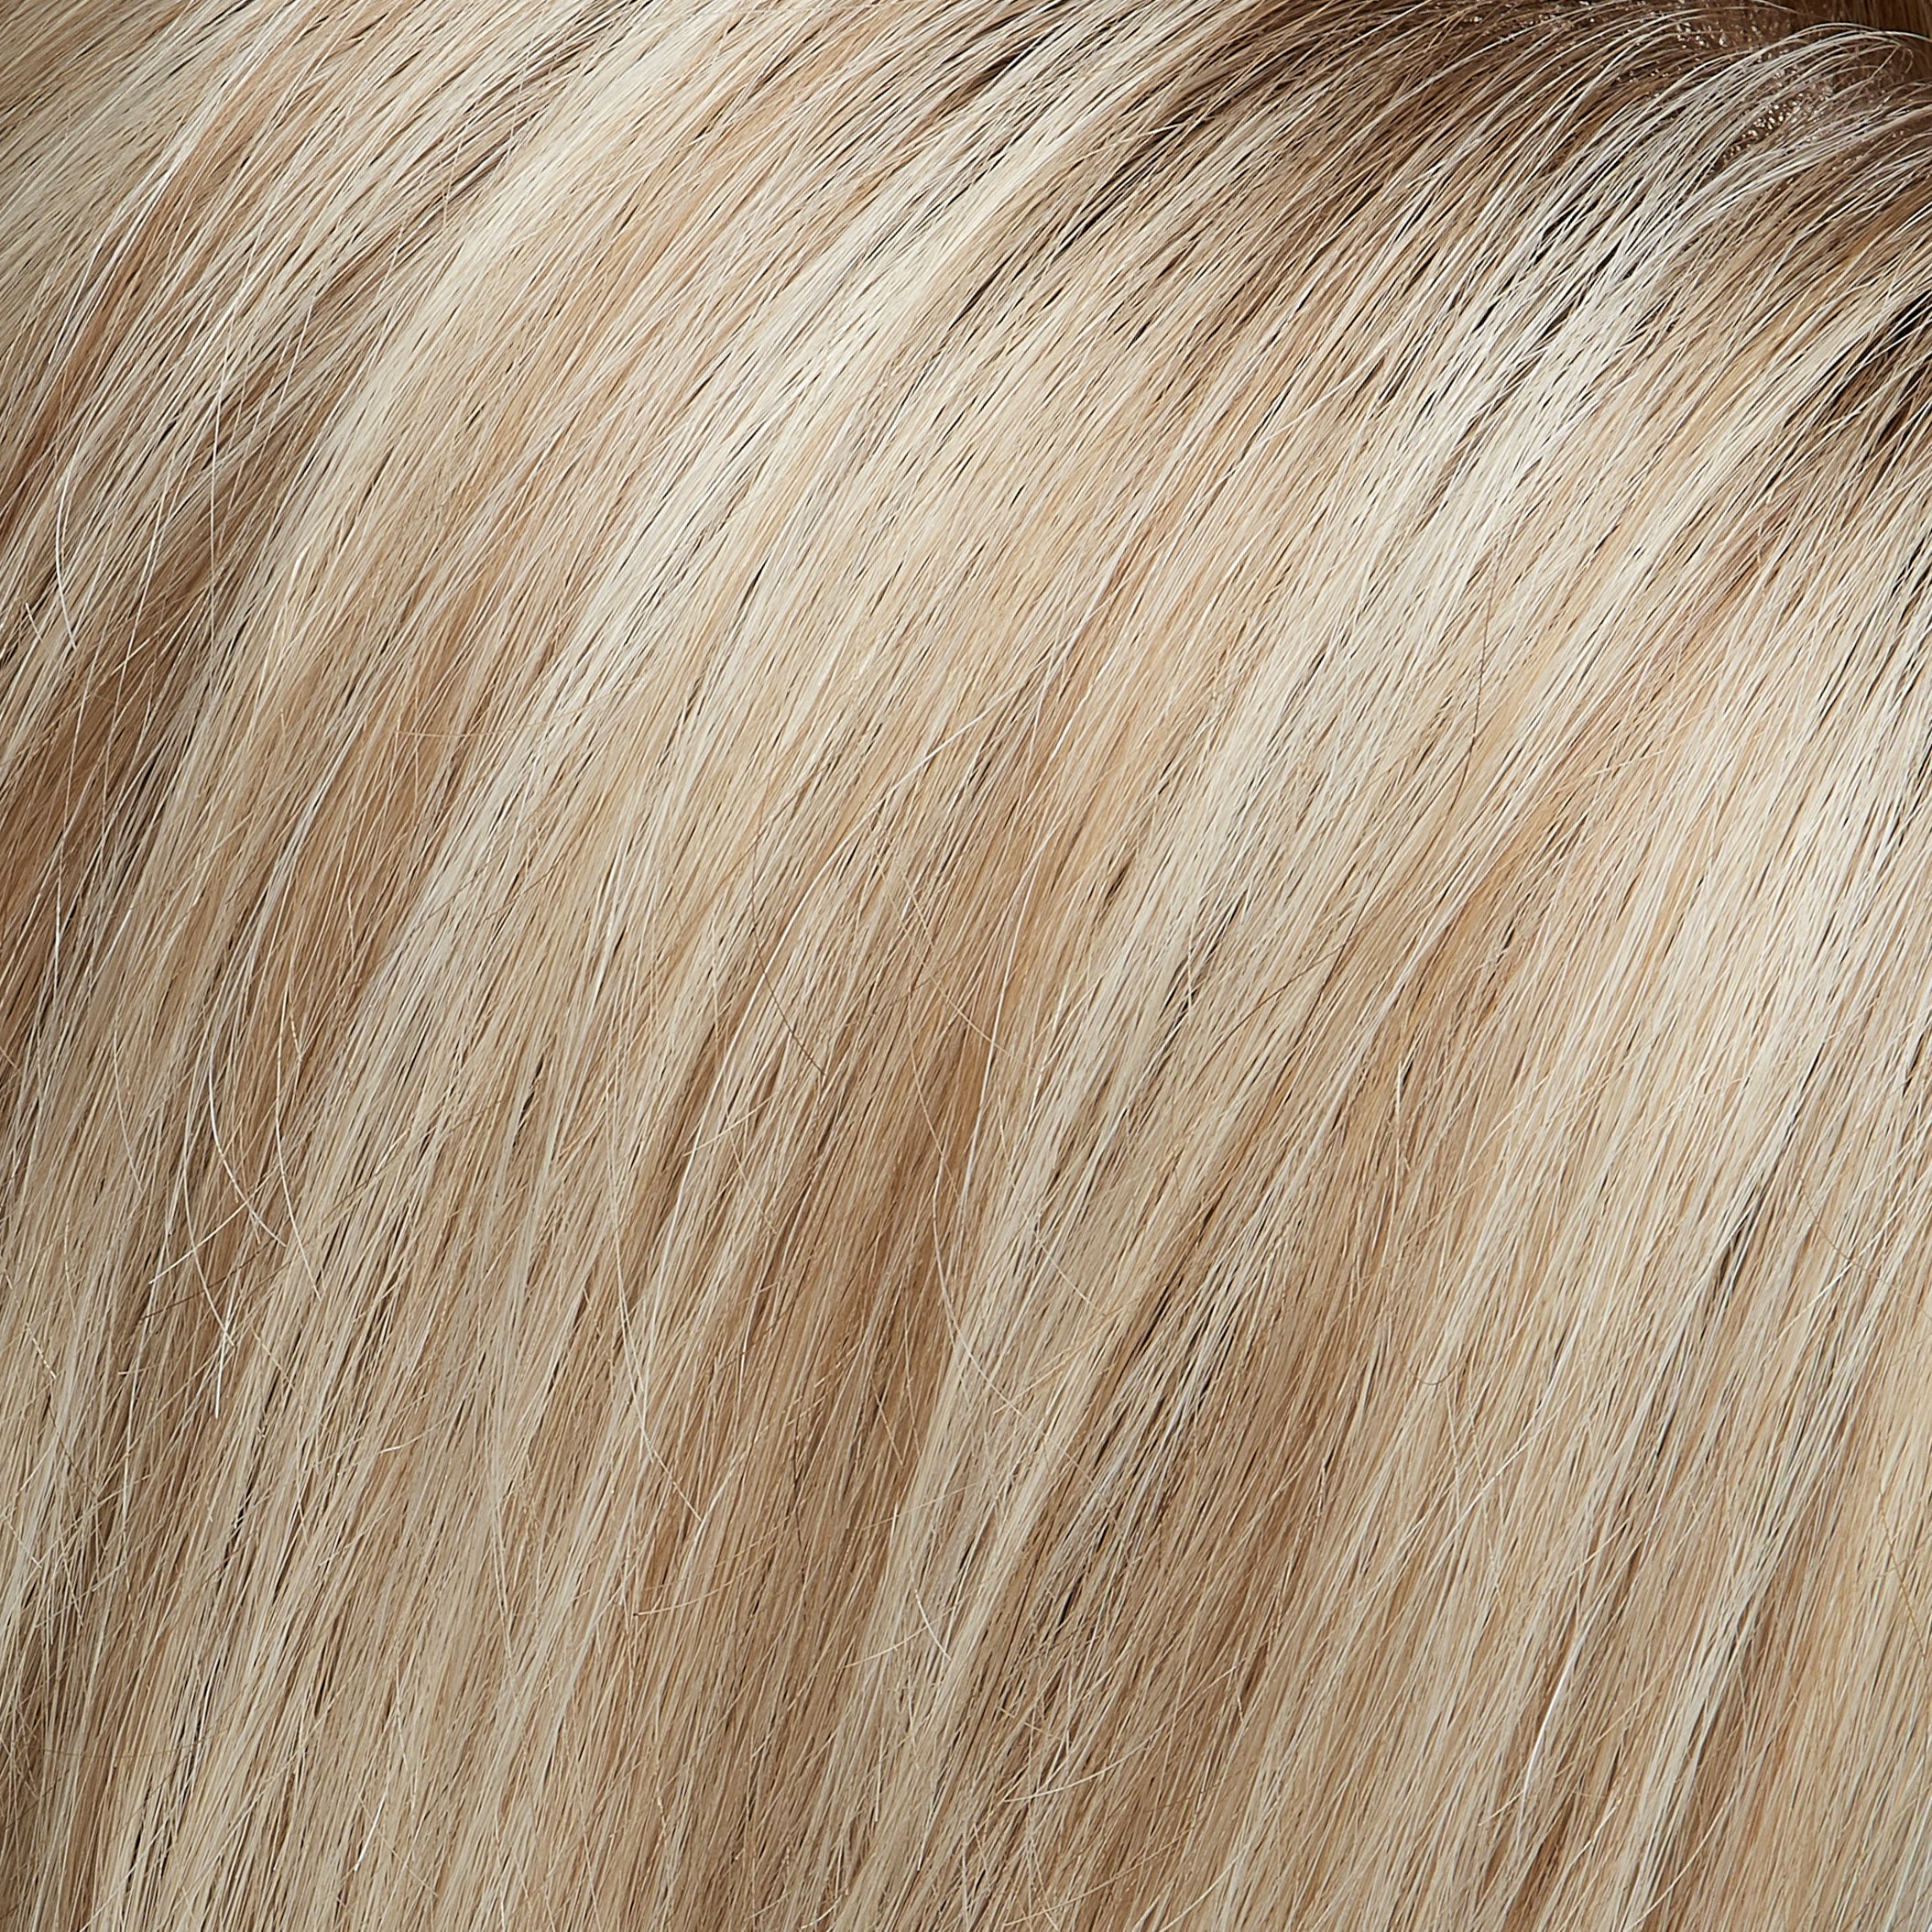 easiPart Medium 12" human hair topper - Jon Renau *NEW*